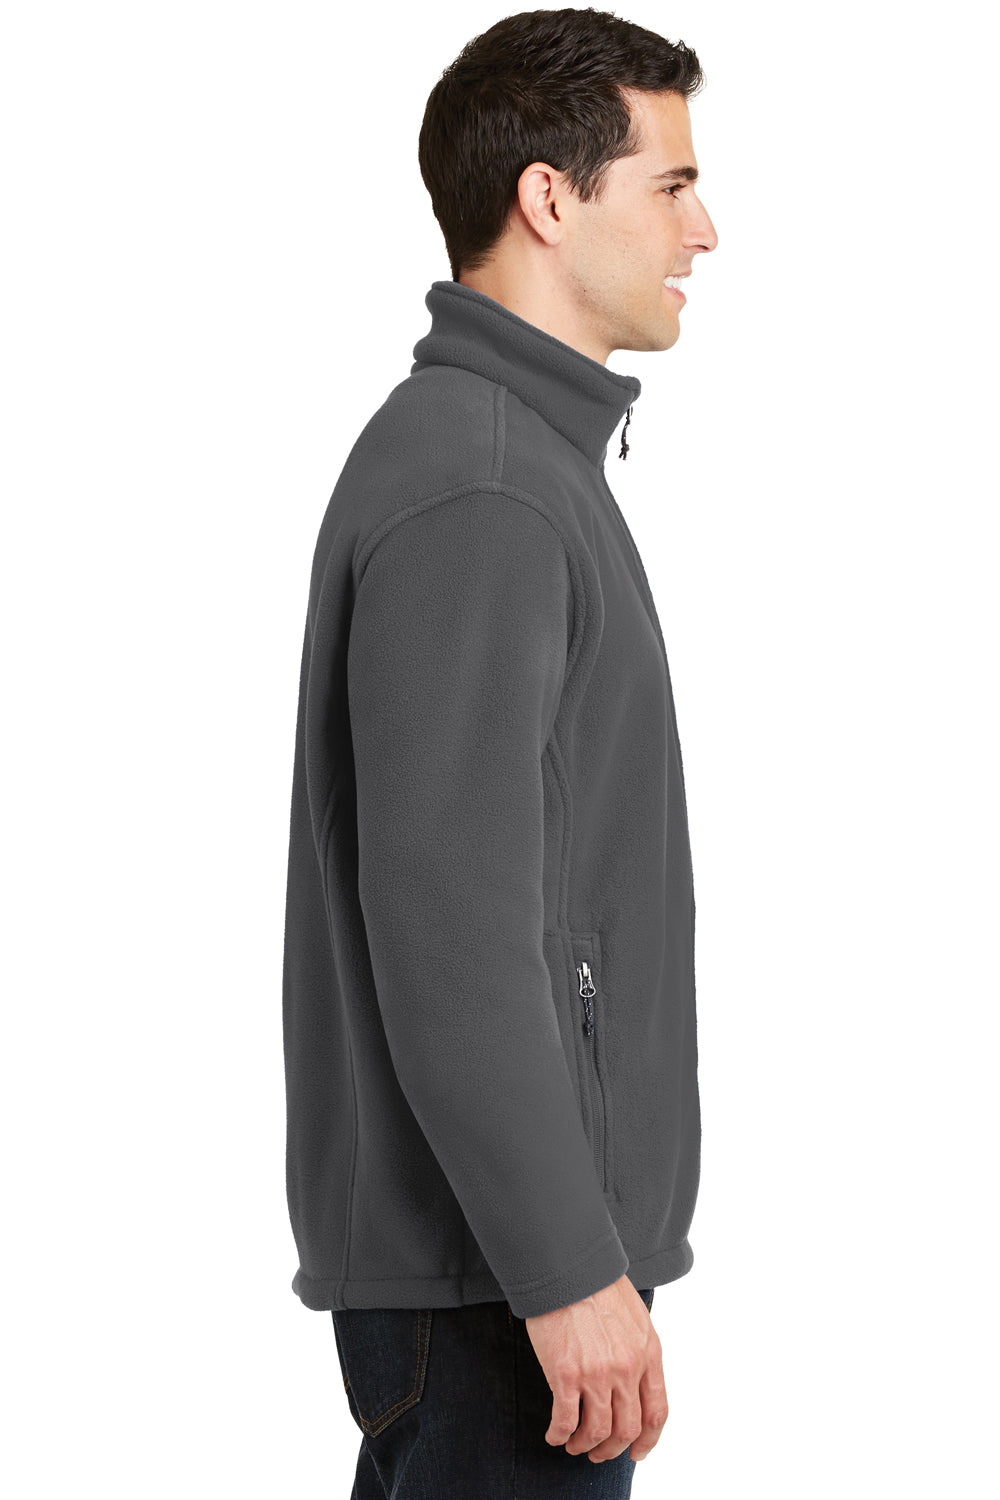 Port Authority F217 Mens Full Zip Fleece Jacket Iron Grey Side